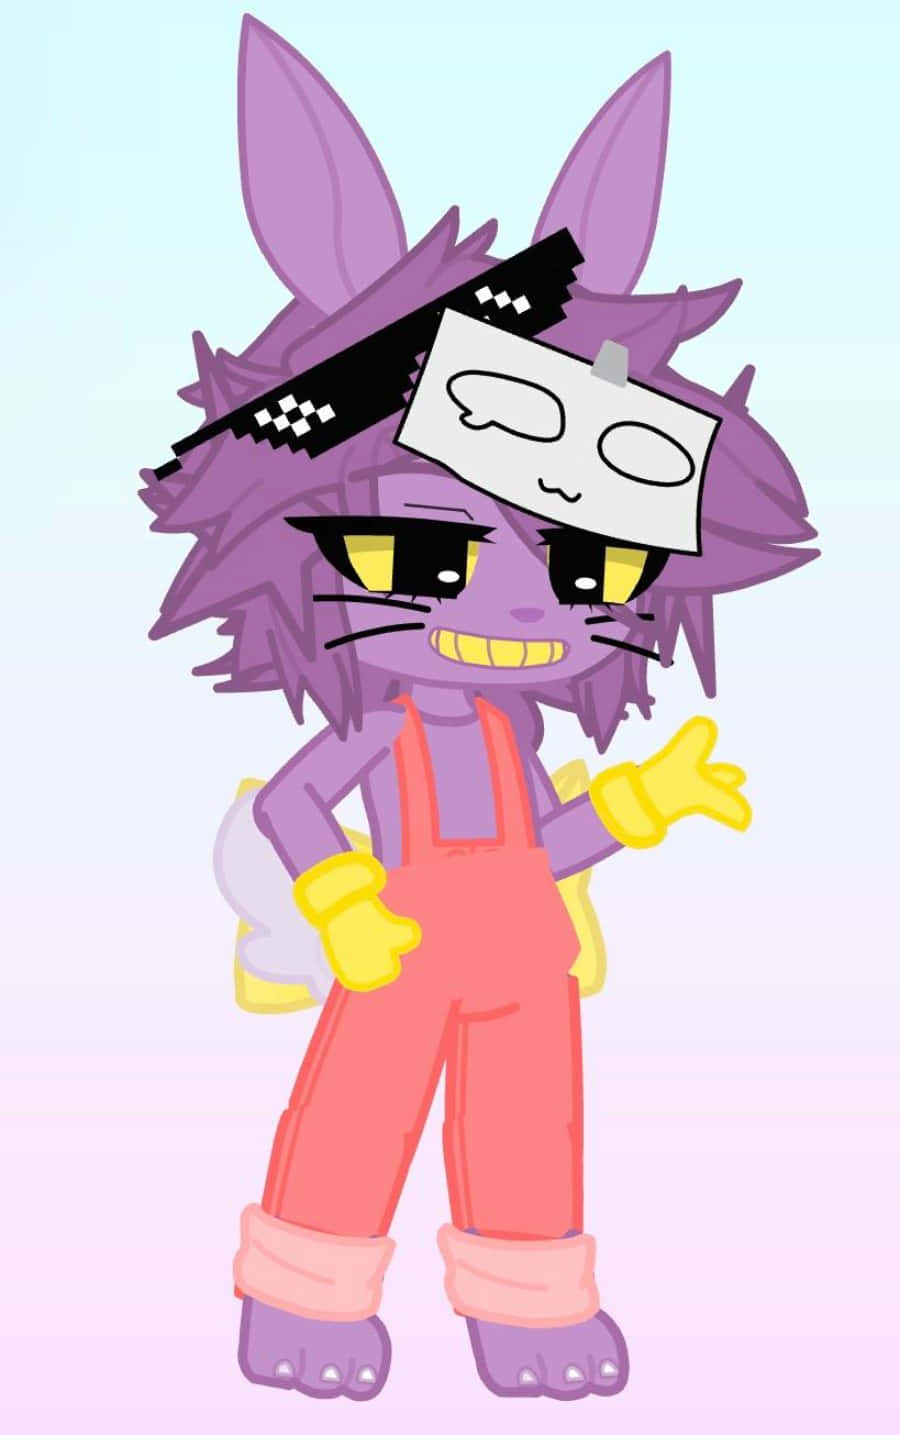 Purple Creature Cartoon Character Wallpaper